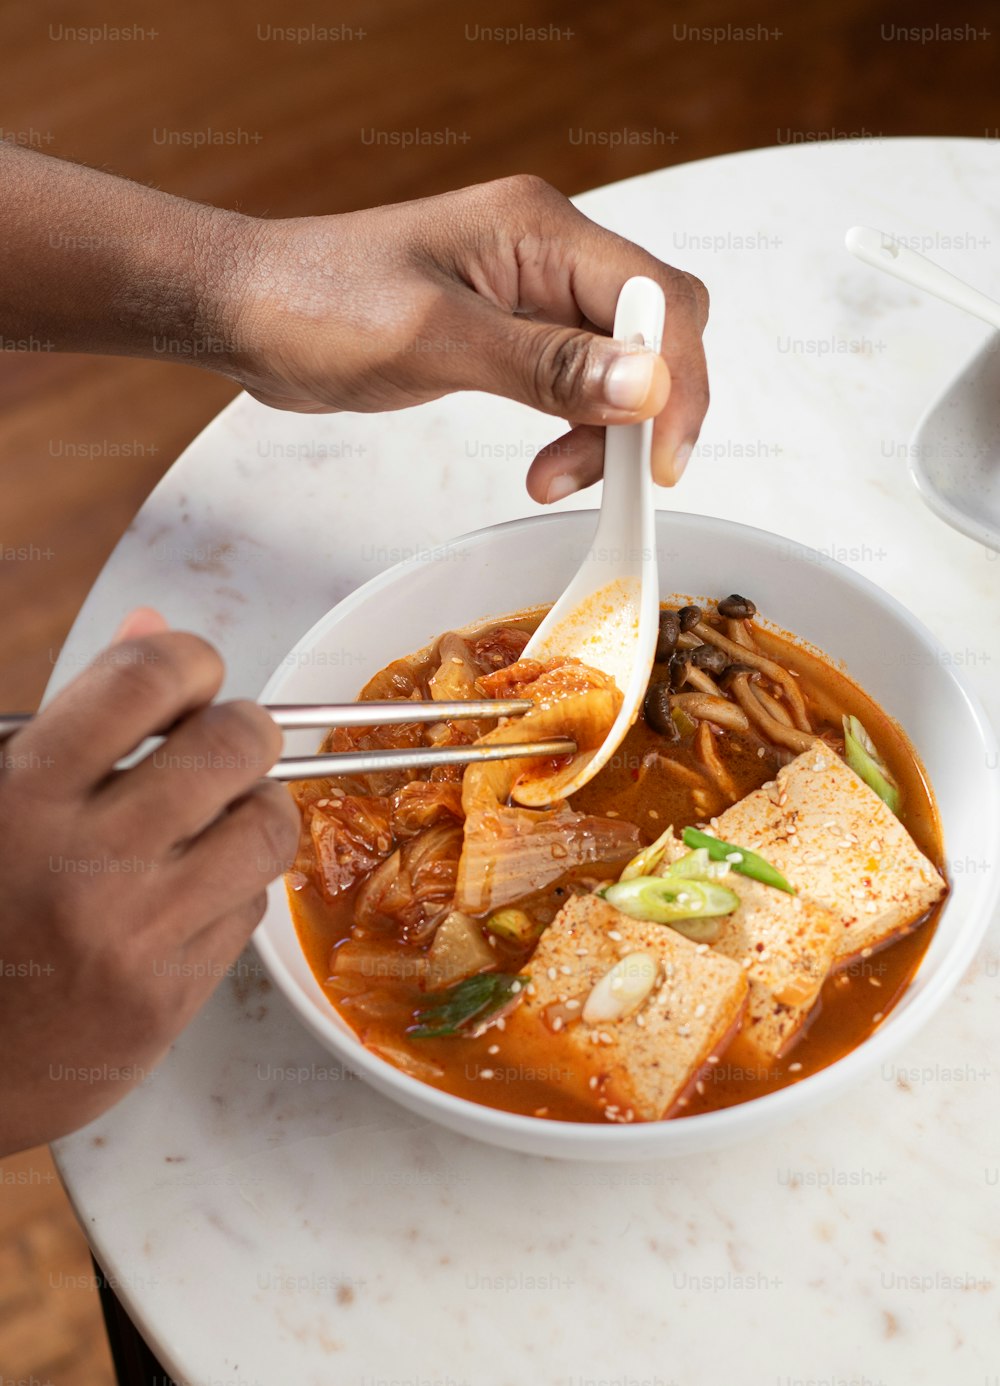 Una persona comiendo un plato de sopa con tofu